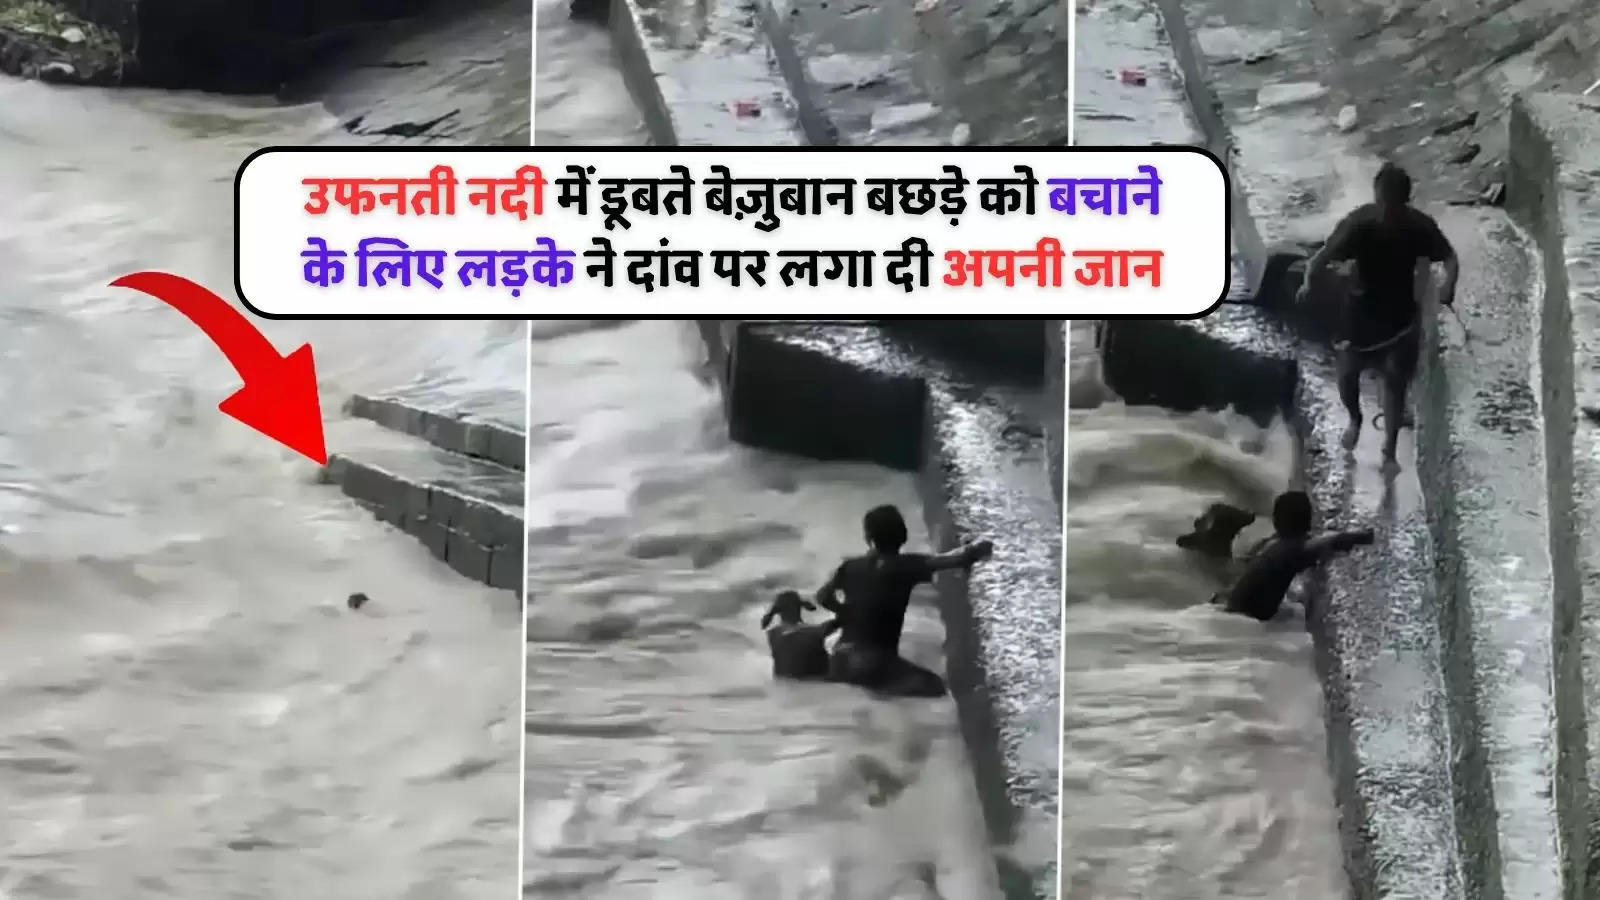 Man saves calf drowning in river